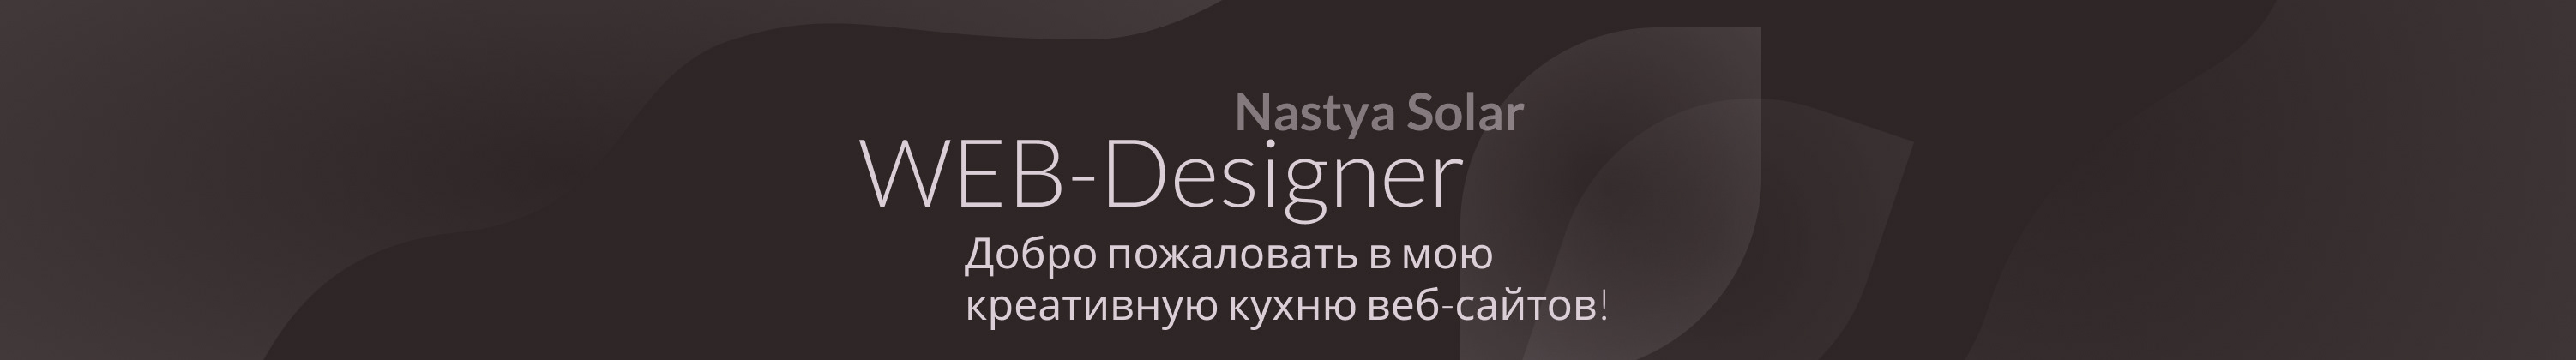 Nastya Solar のプロファイルバナー